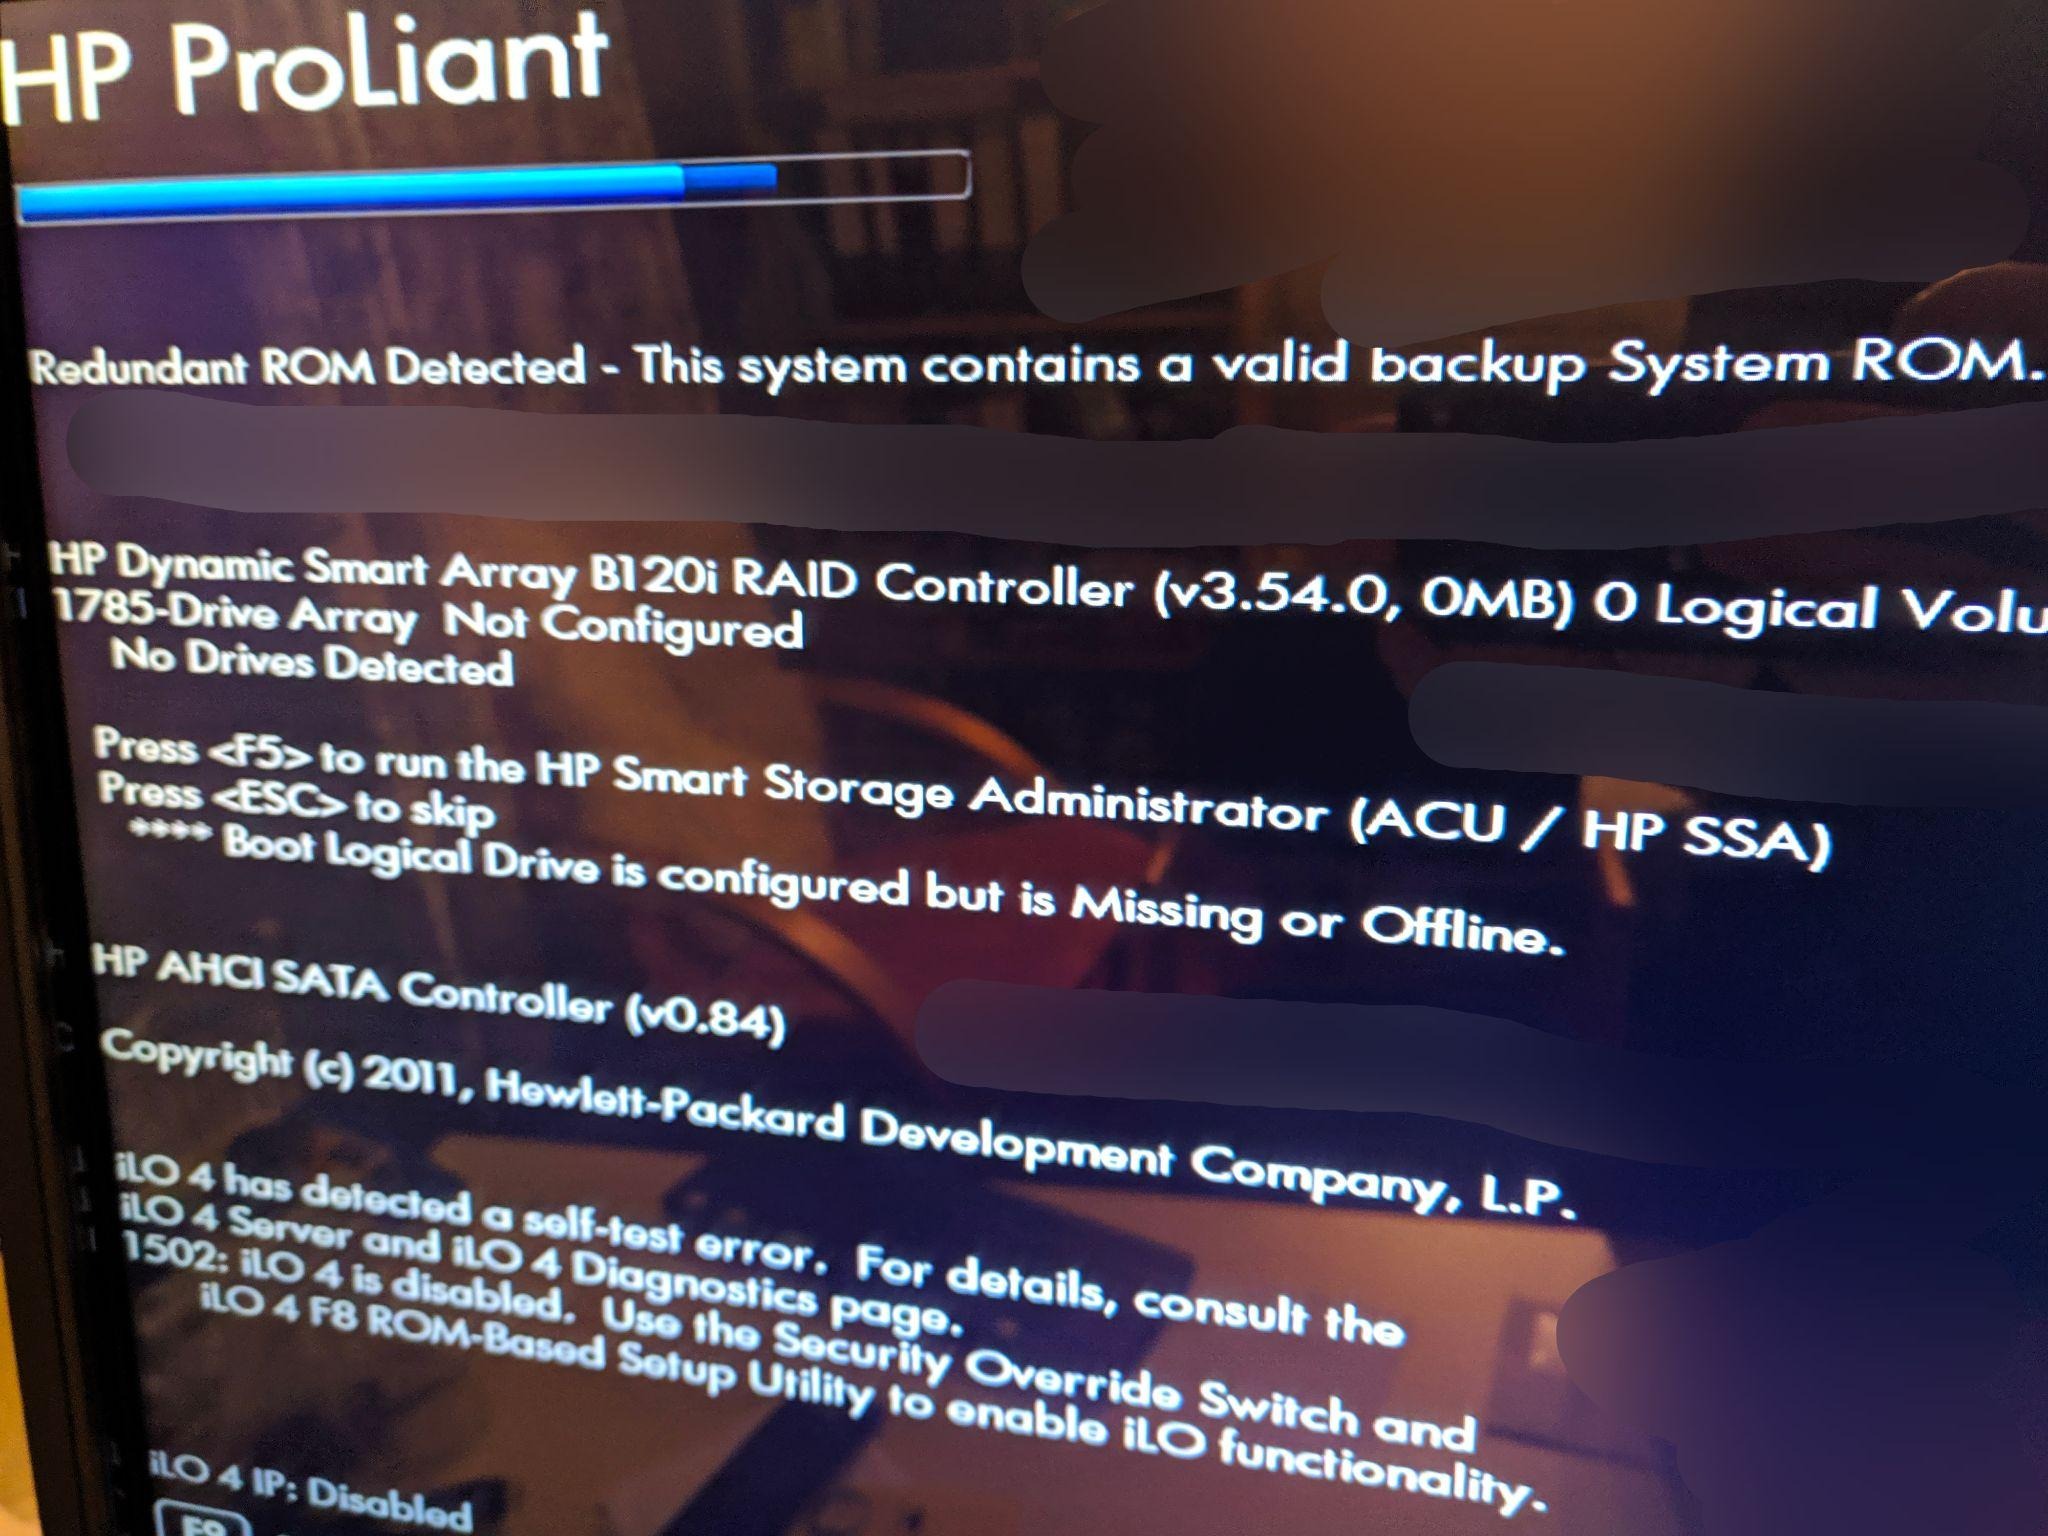 Boot problems, iLO 4 self-test error, Smart Array ... - Hewlett Packard  Enterprise Community